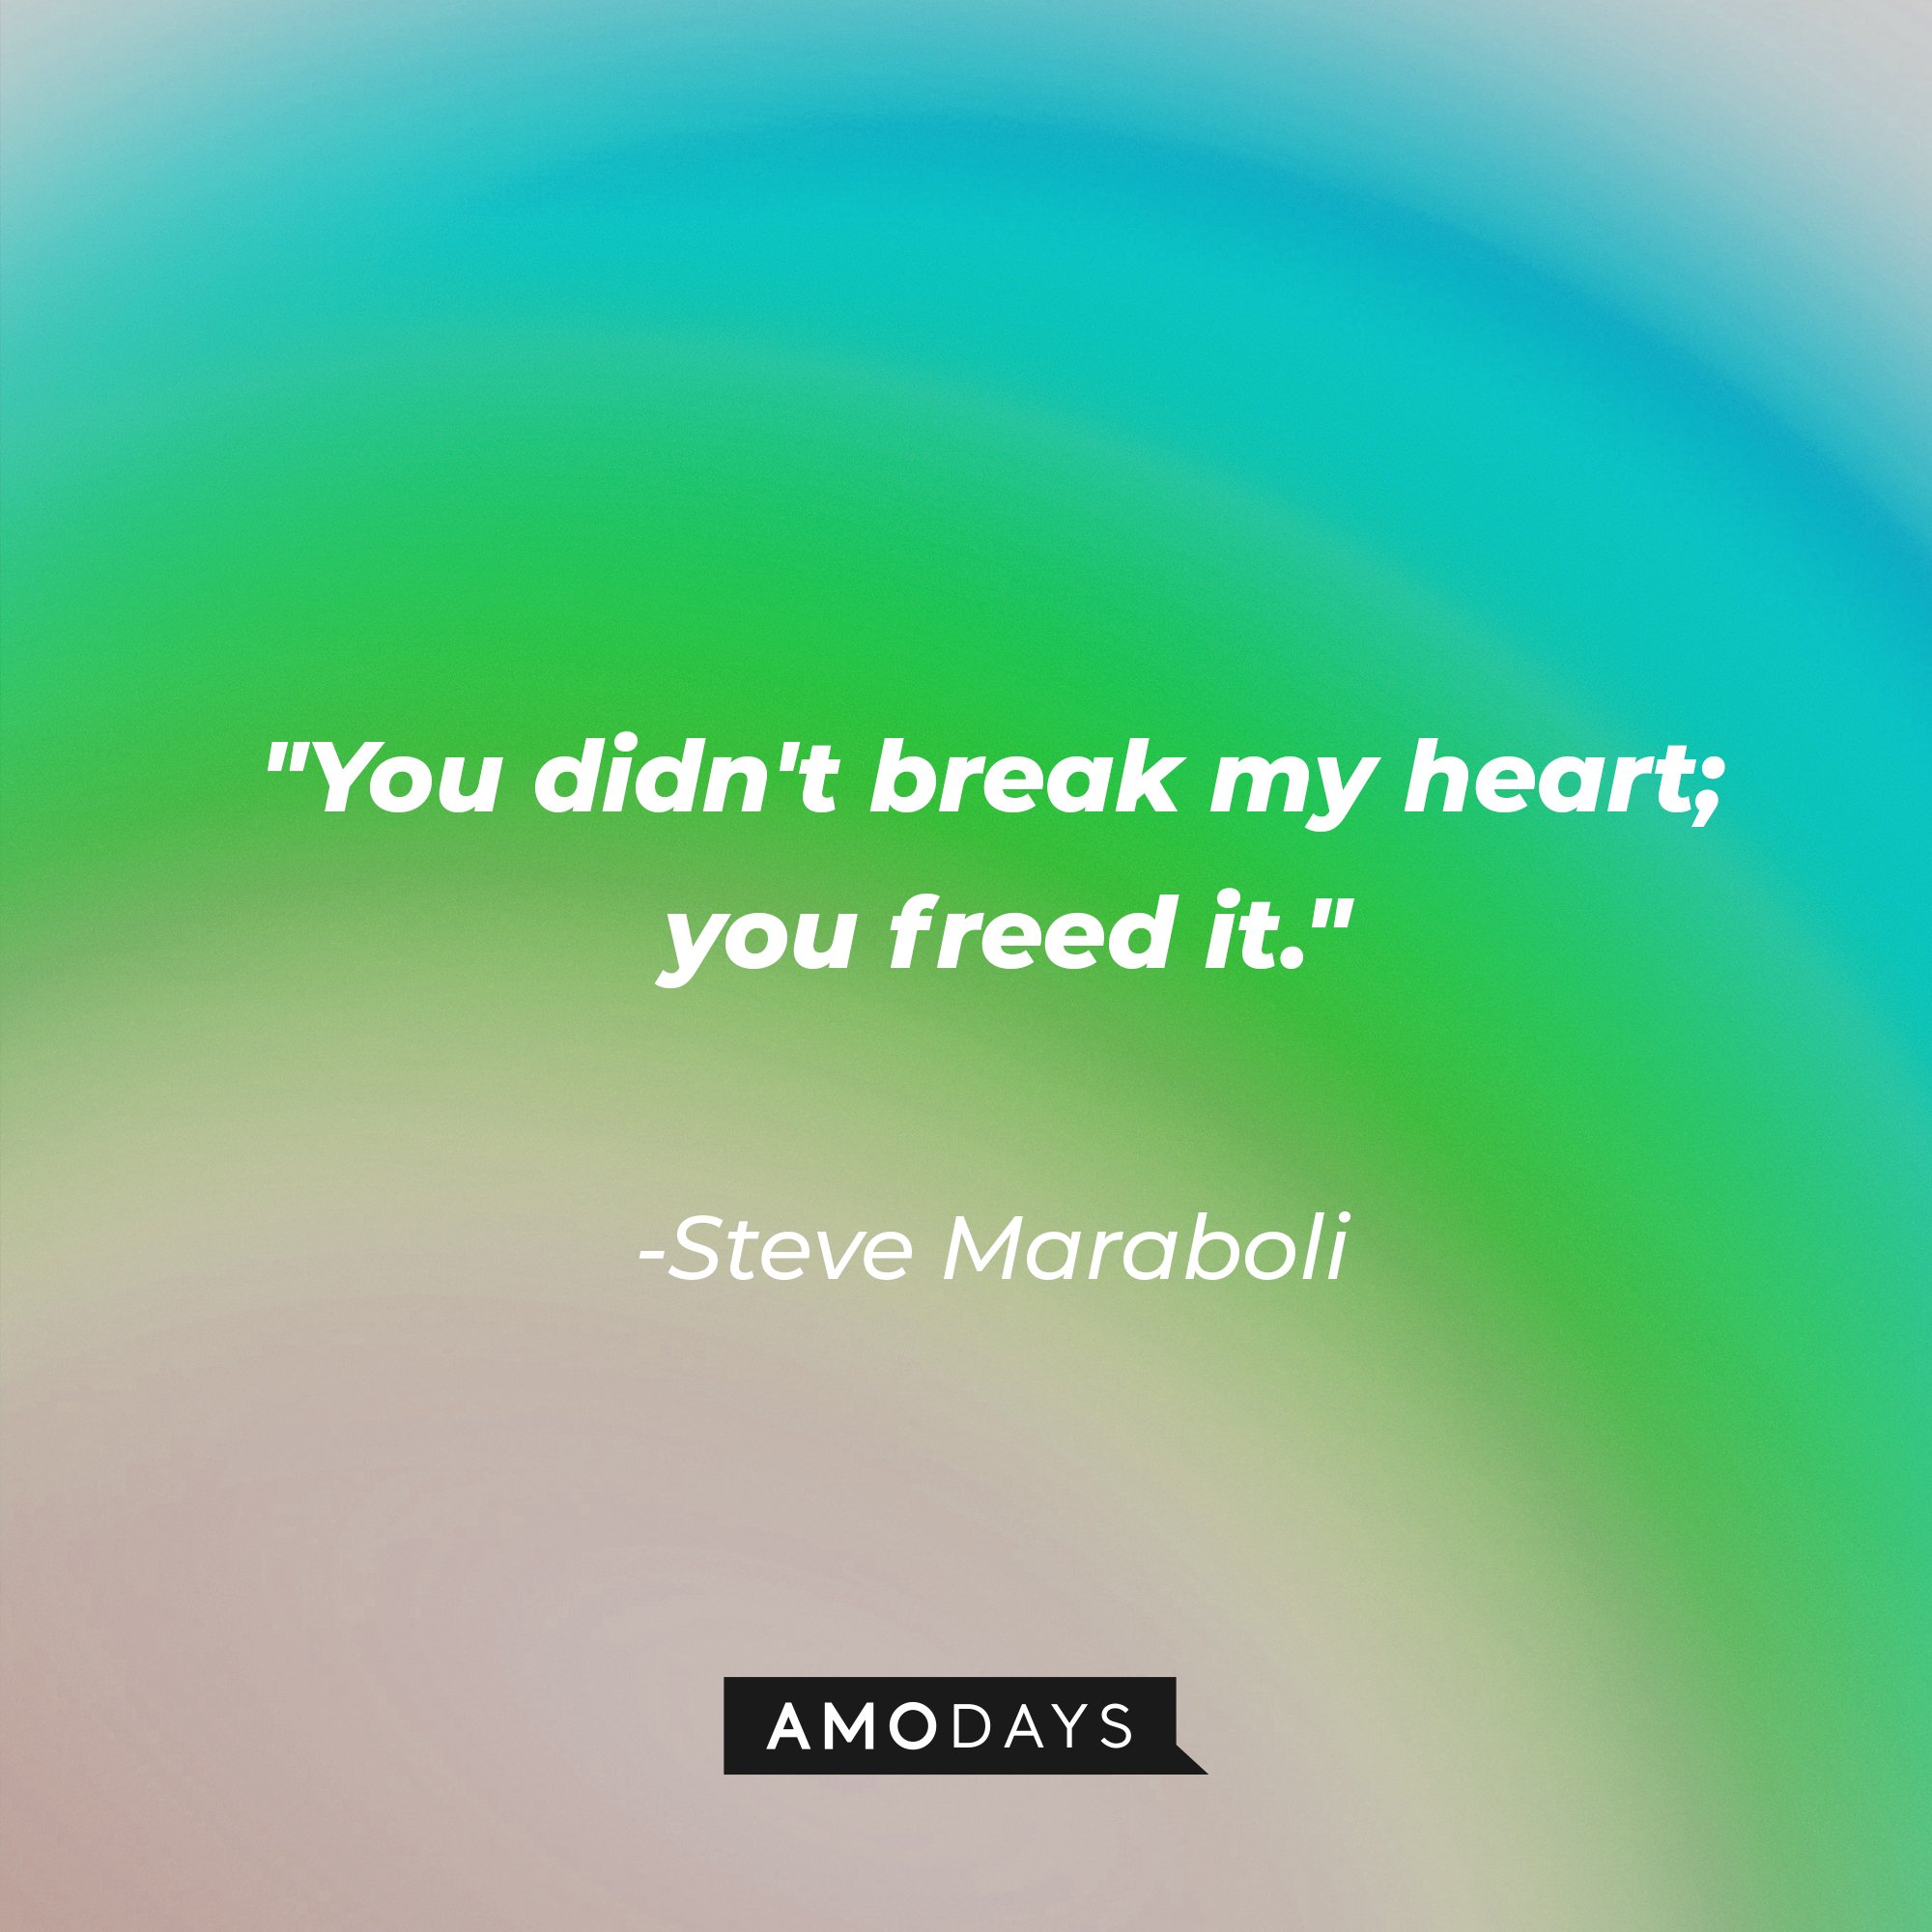 Steve Maraboli's quote: "You didn't break my heart; you freed it." | Image: AmoDays